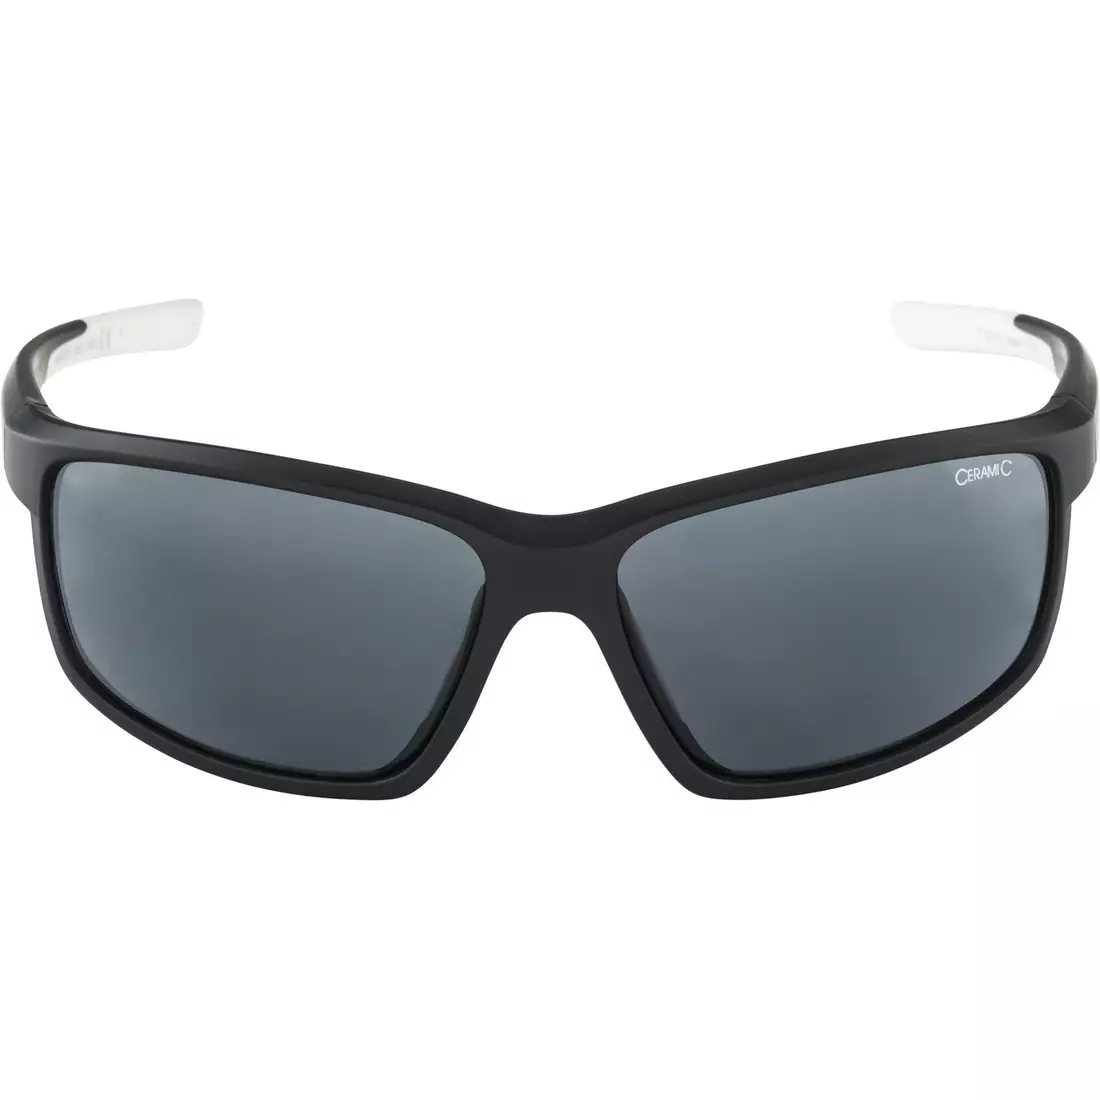 ALPINA DEFEY cycling/sport glasses, black-white matt